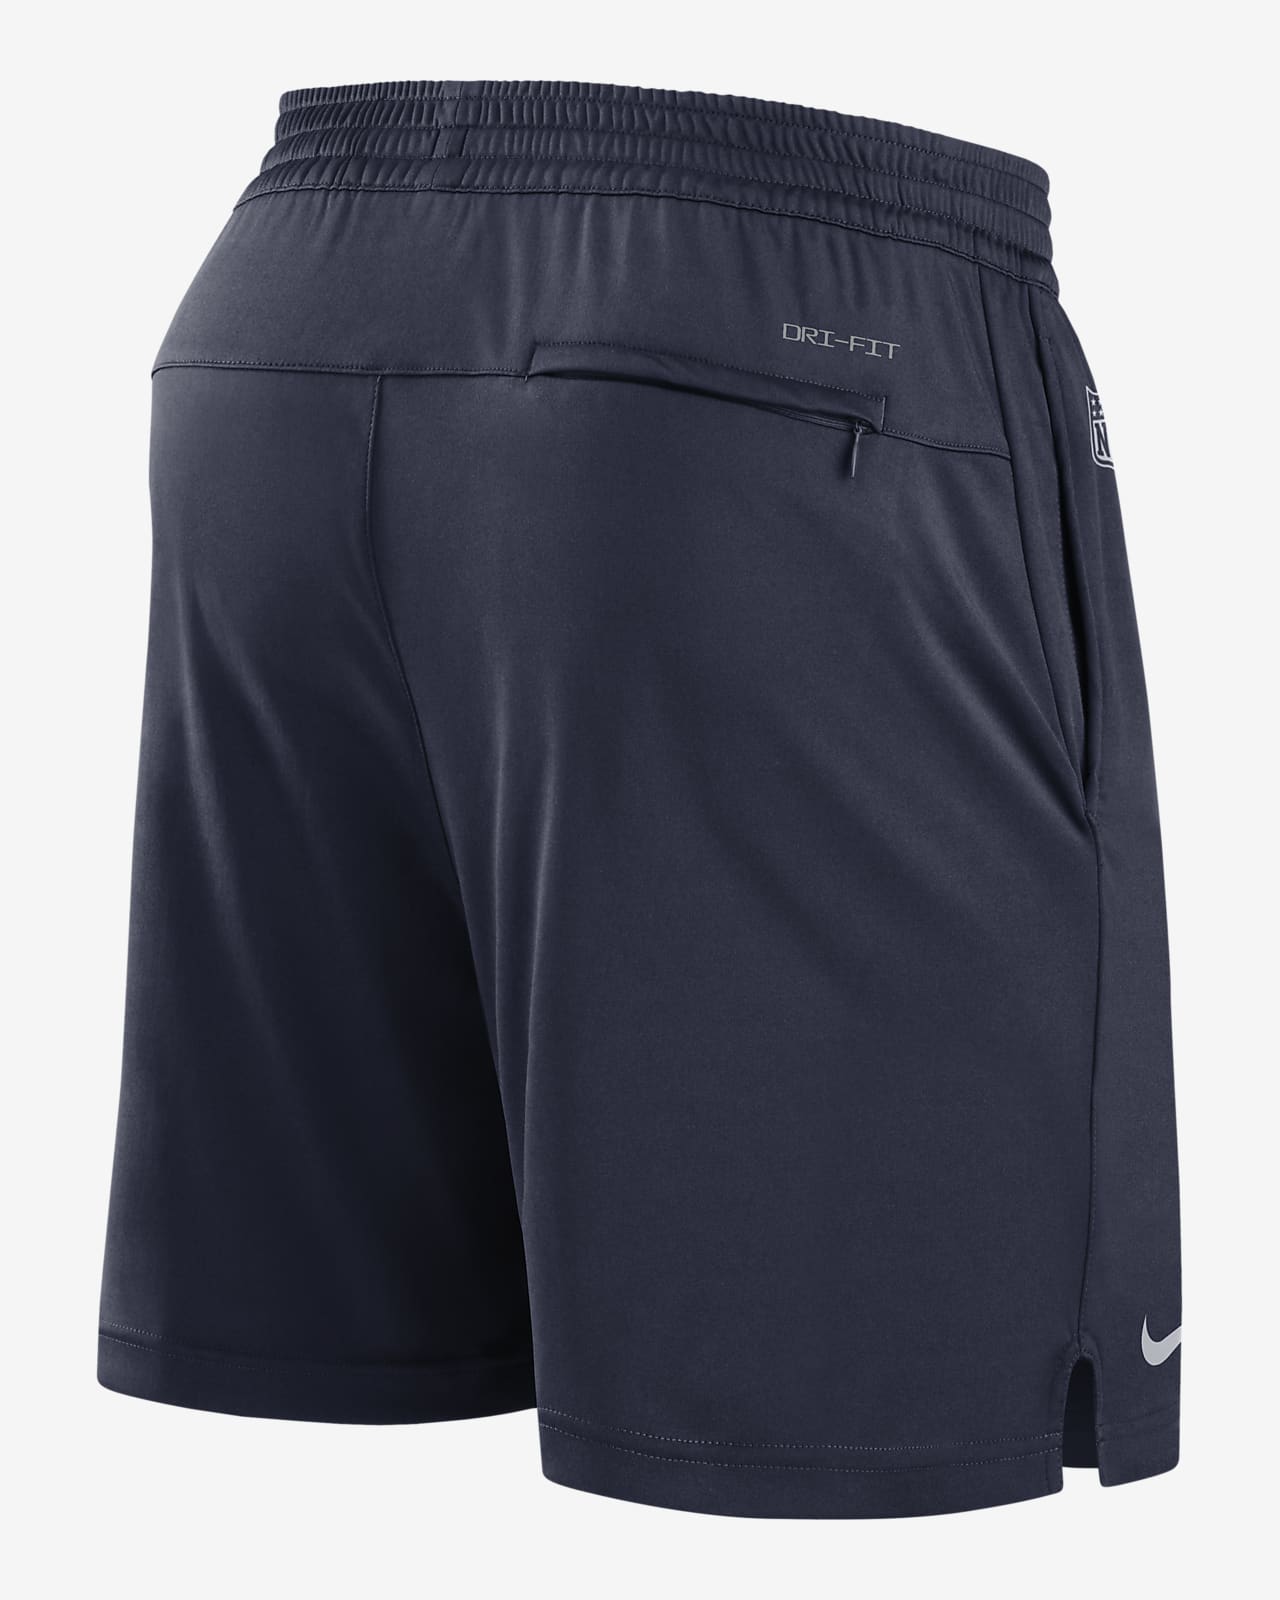 Nike Dri-FIT Sideline (NFL Dallas Cowboys) Men's Shorts.